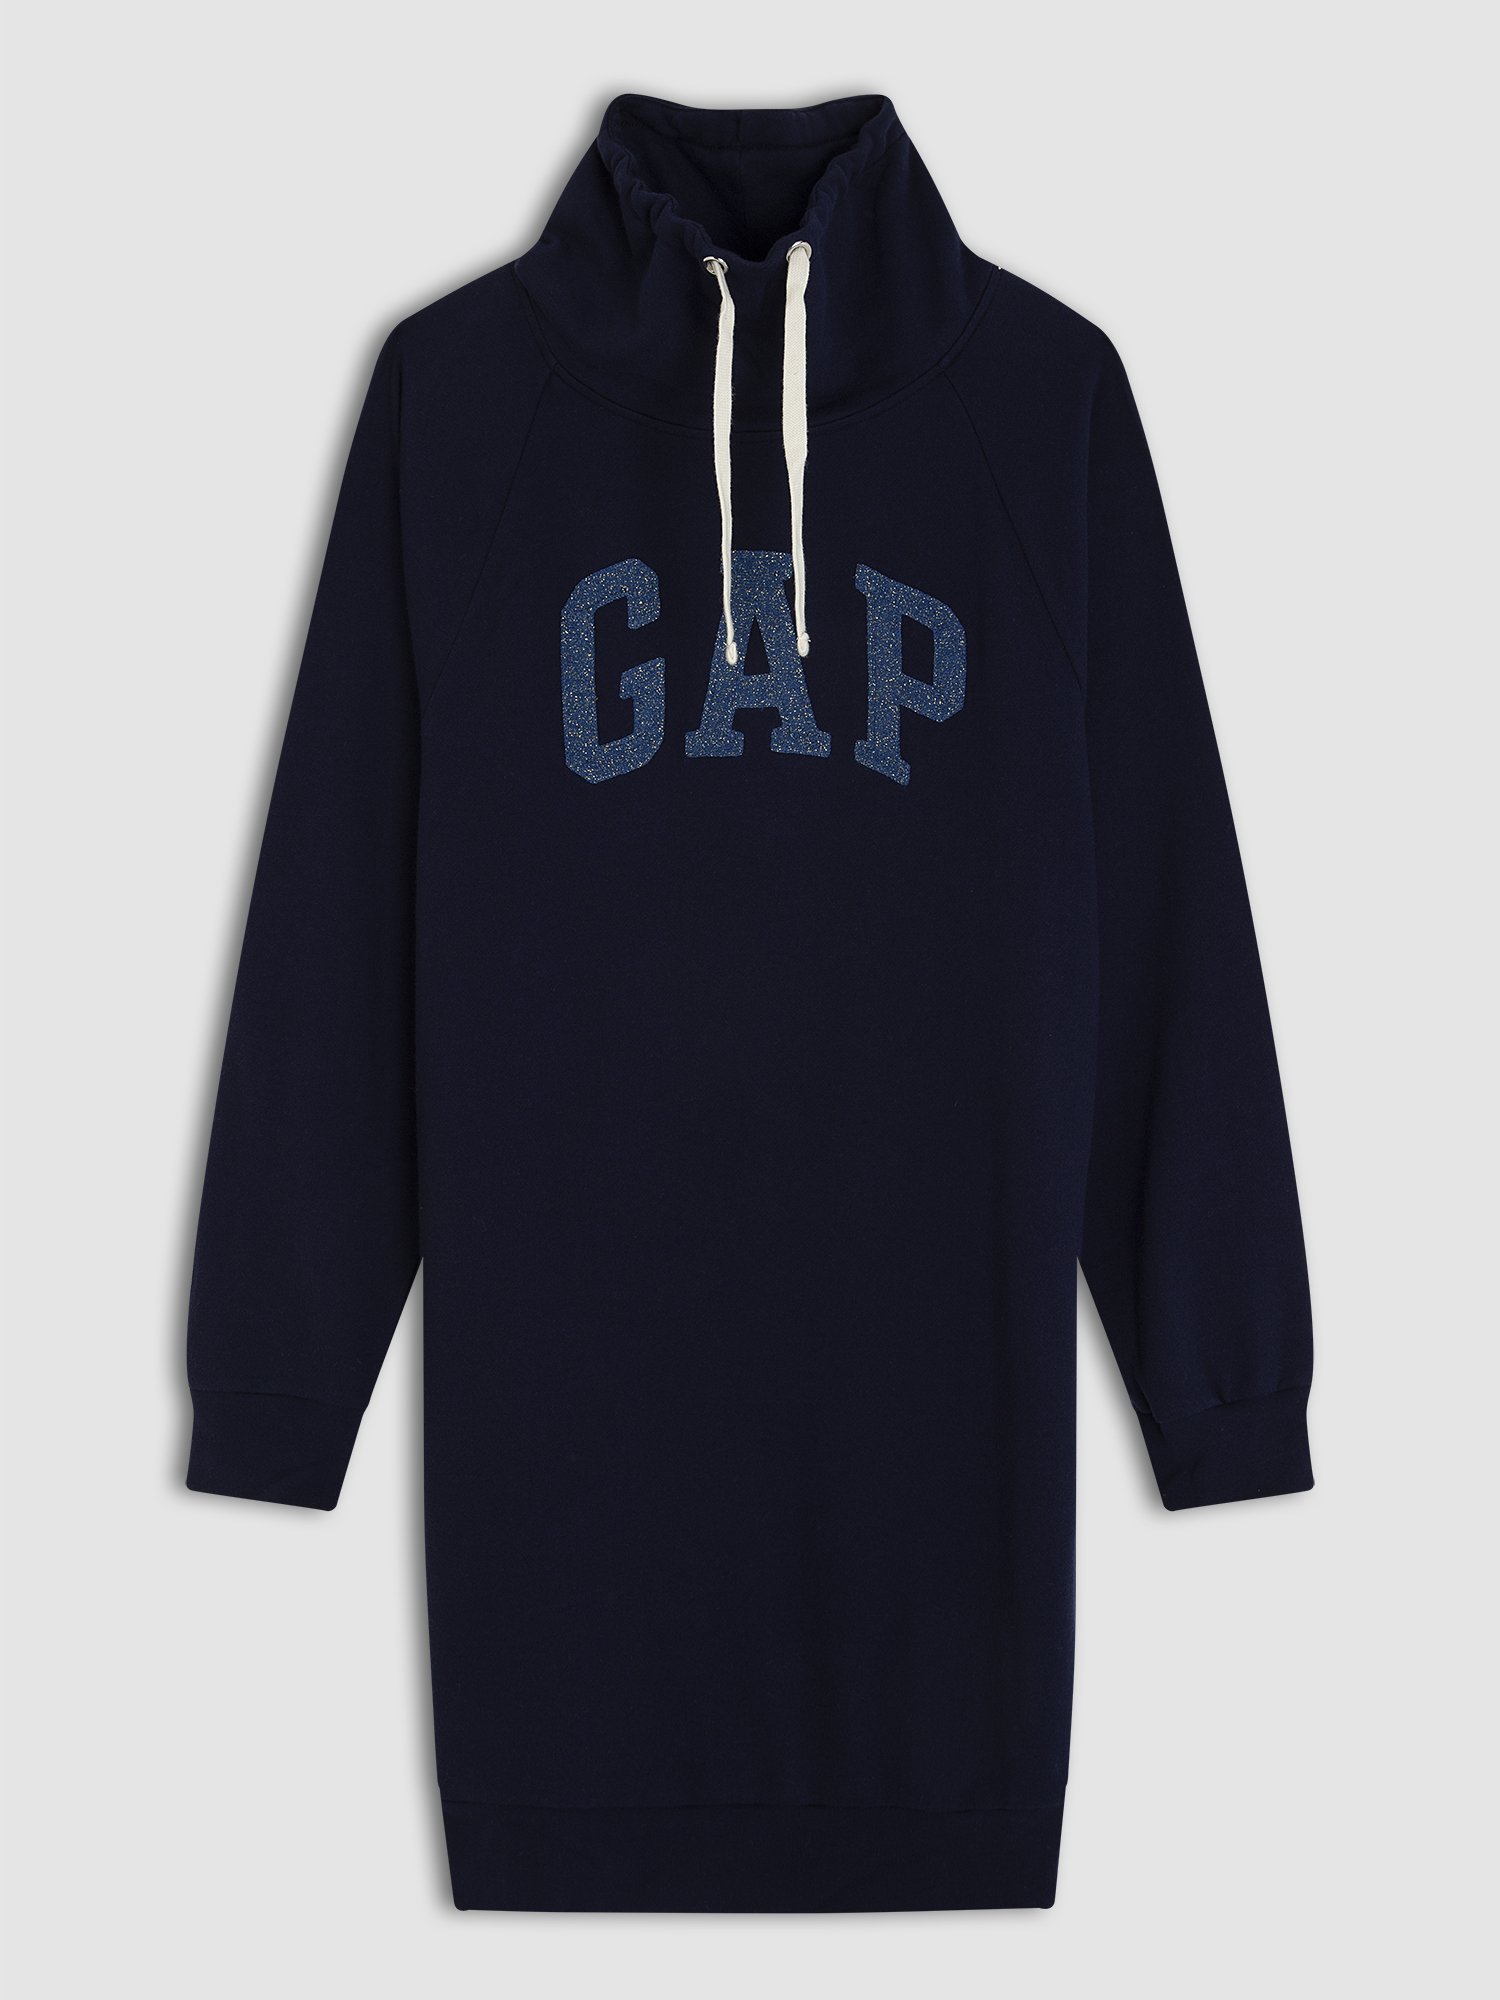 Gap Logo Sweatshirt Elbise product image